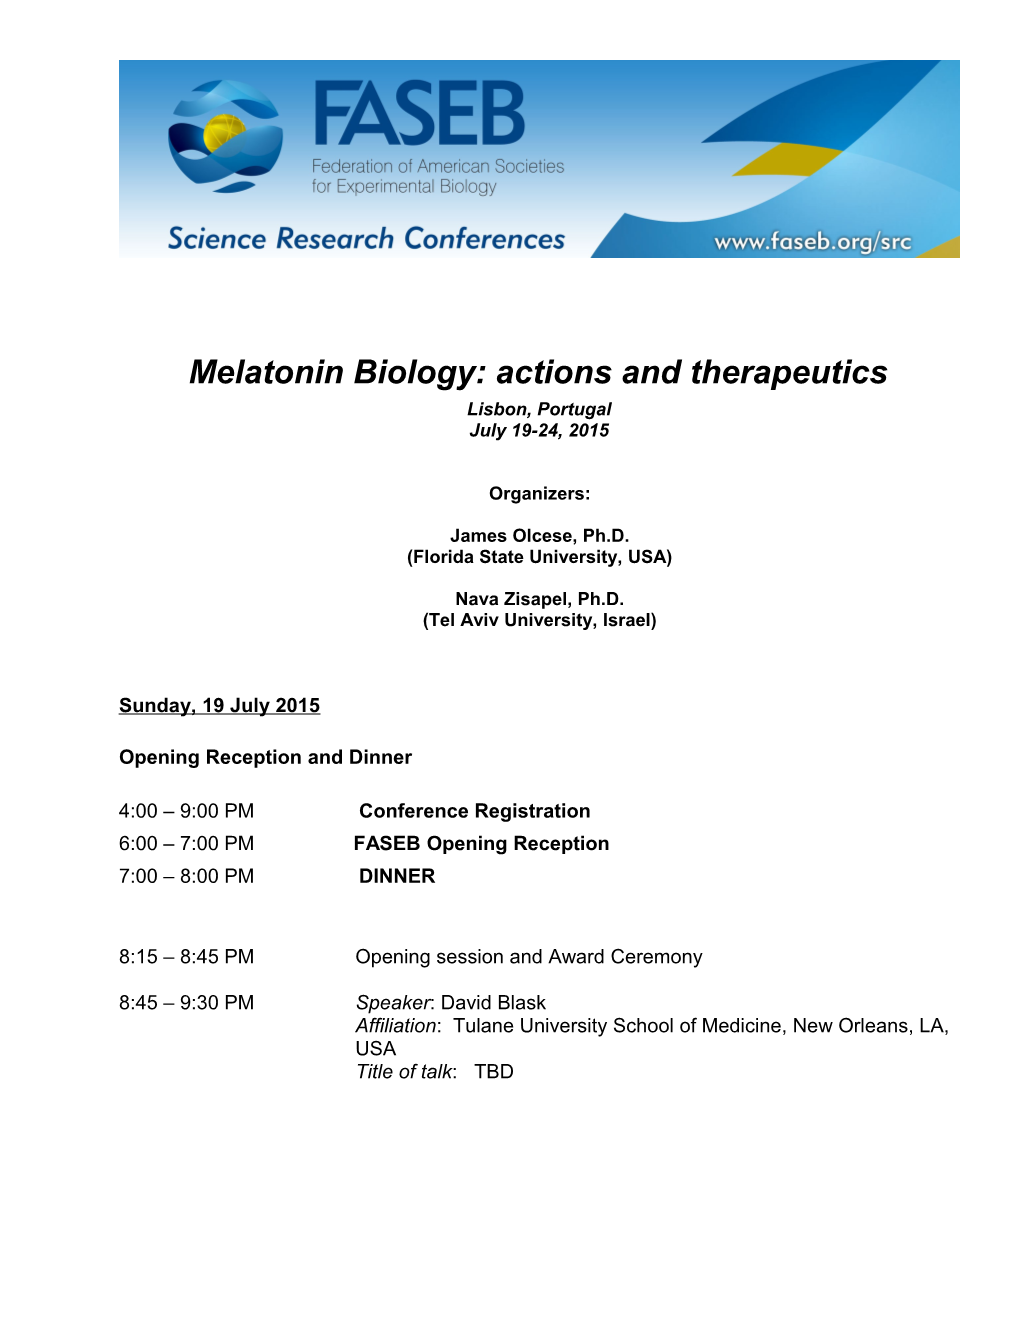 Melatonin Biology: Actions and Therapeutics